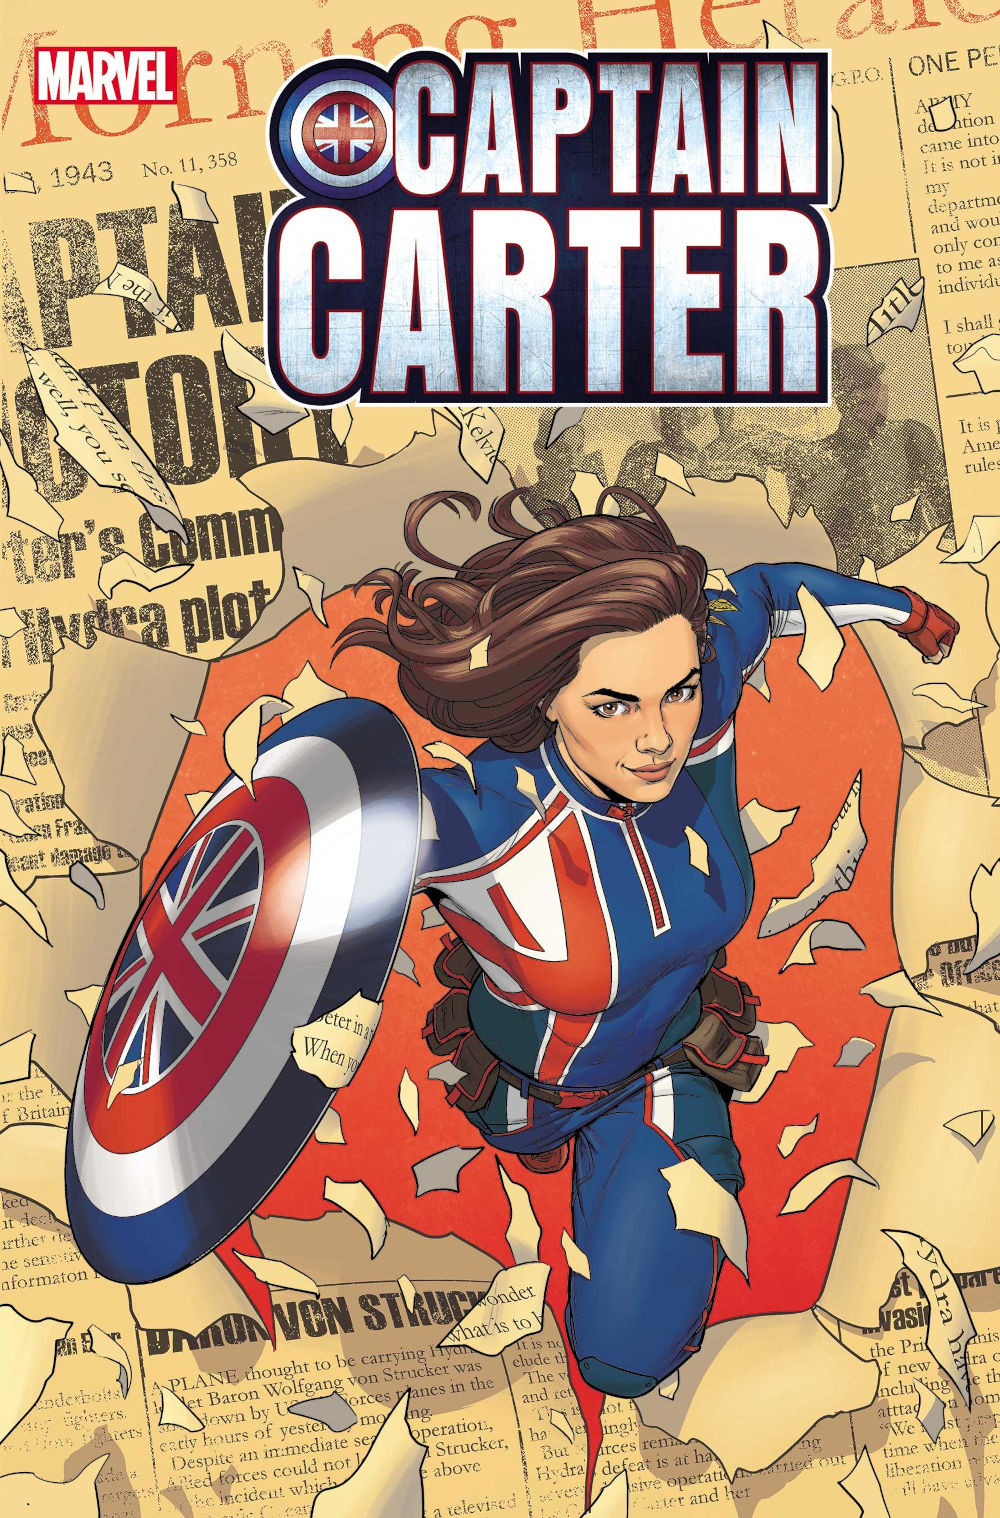 Captain Carter regresará a Marvel con una miniserie